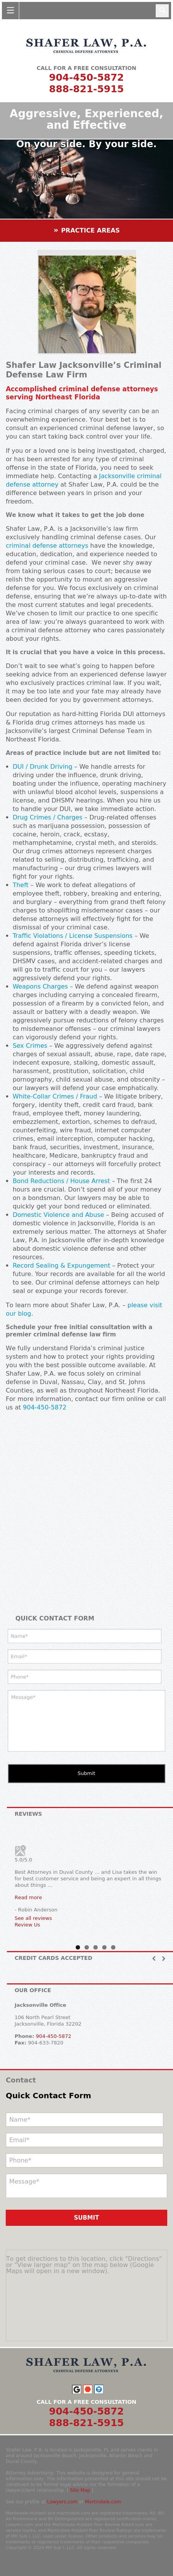 Shafer, Robert & Associates - Jacksonville FL Lawyers